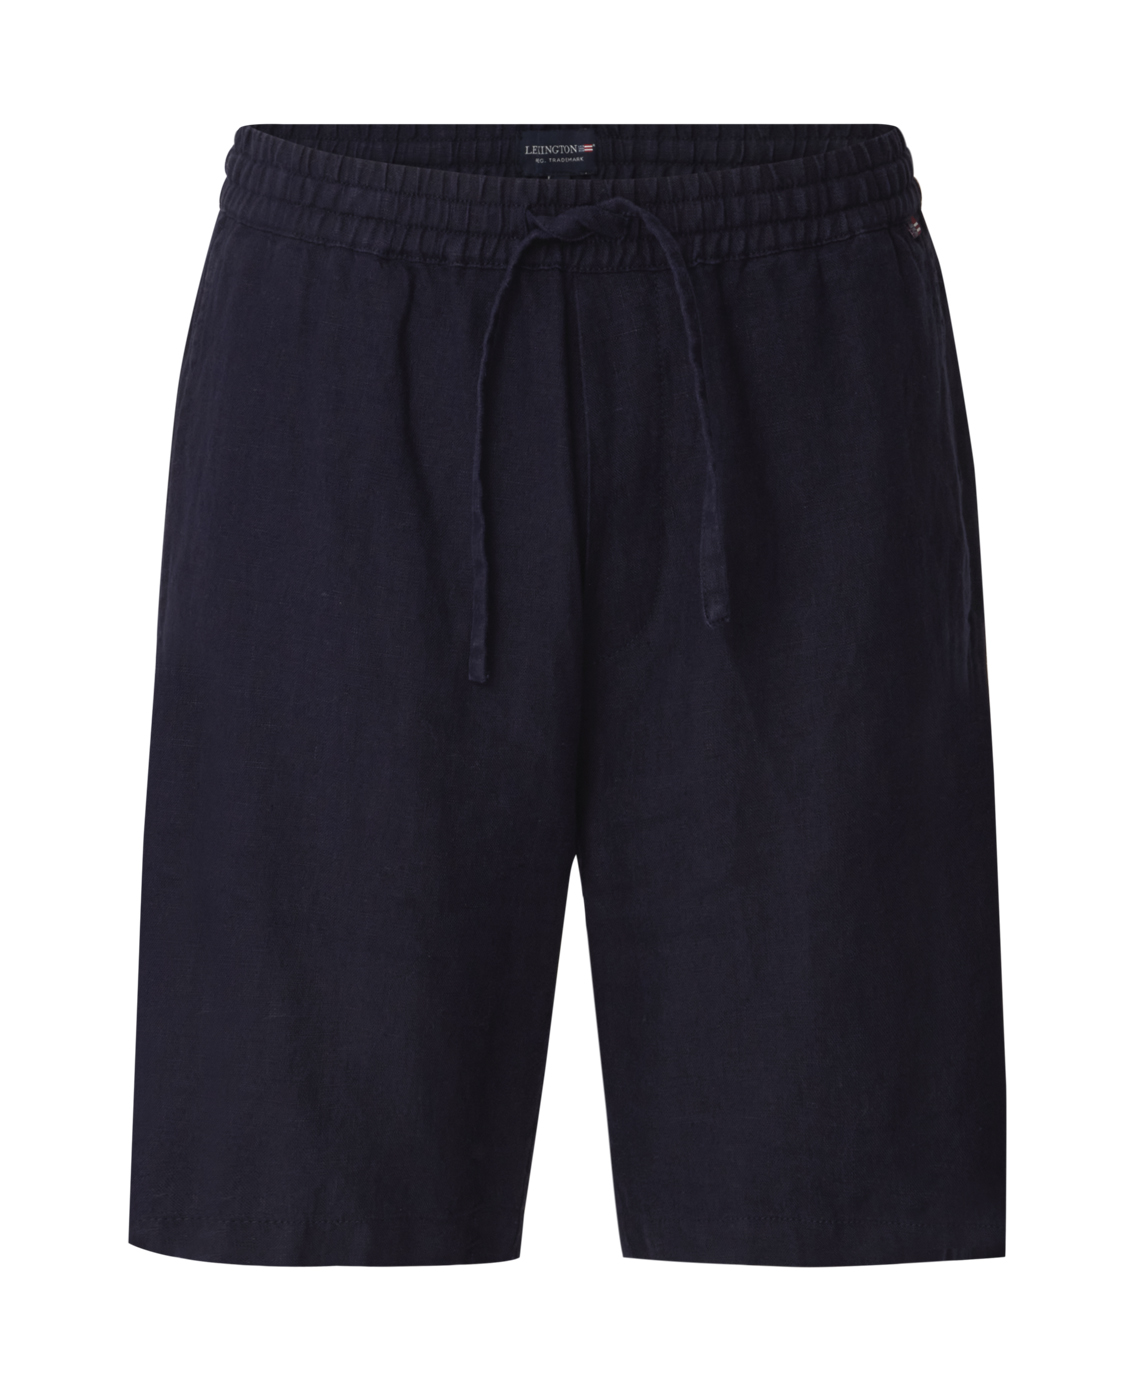 Clifford Linen Shorts